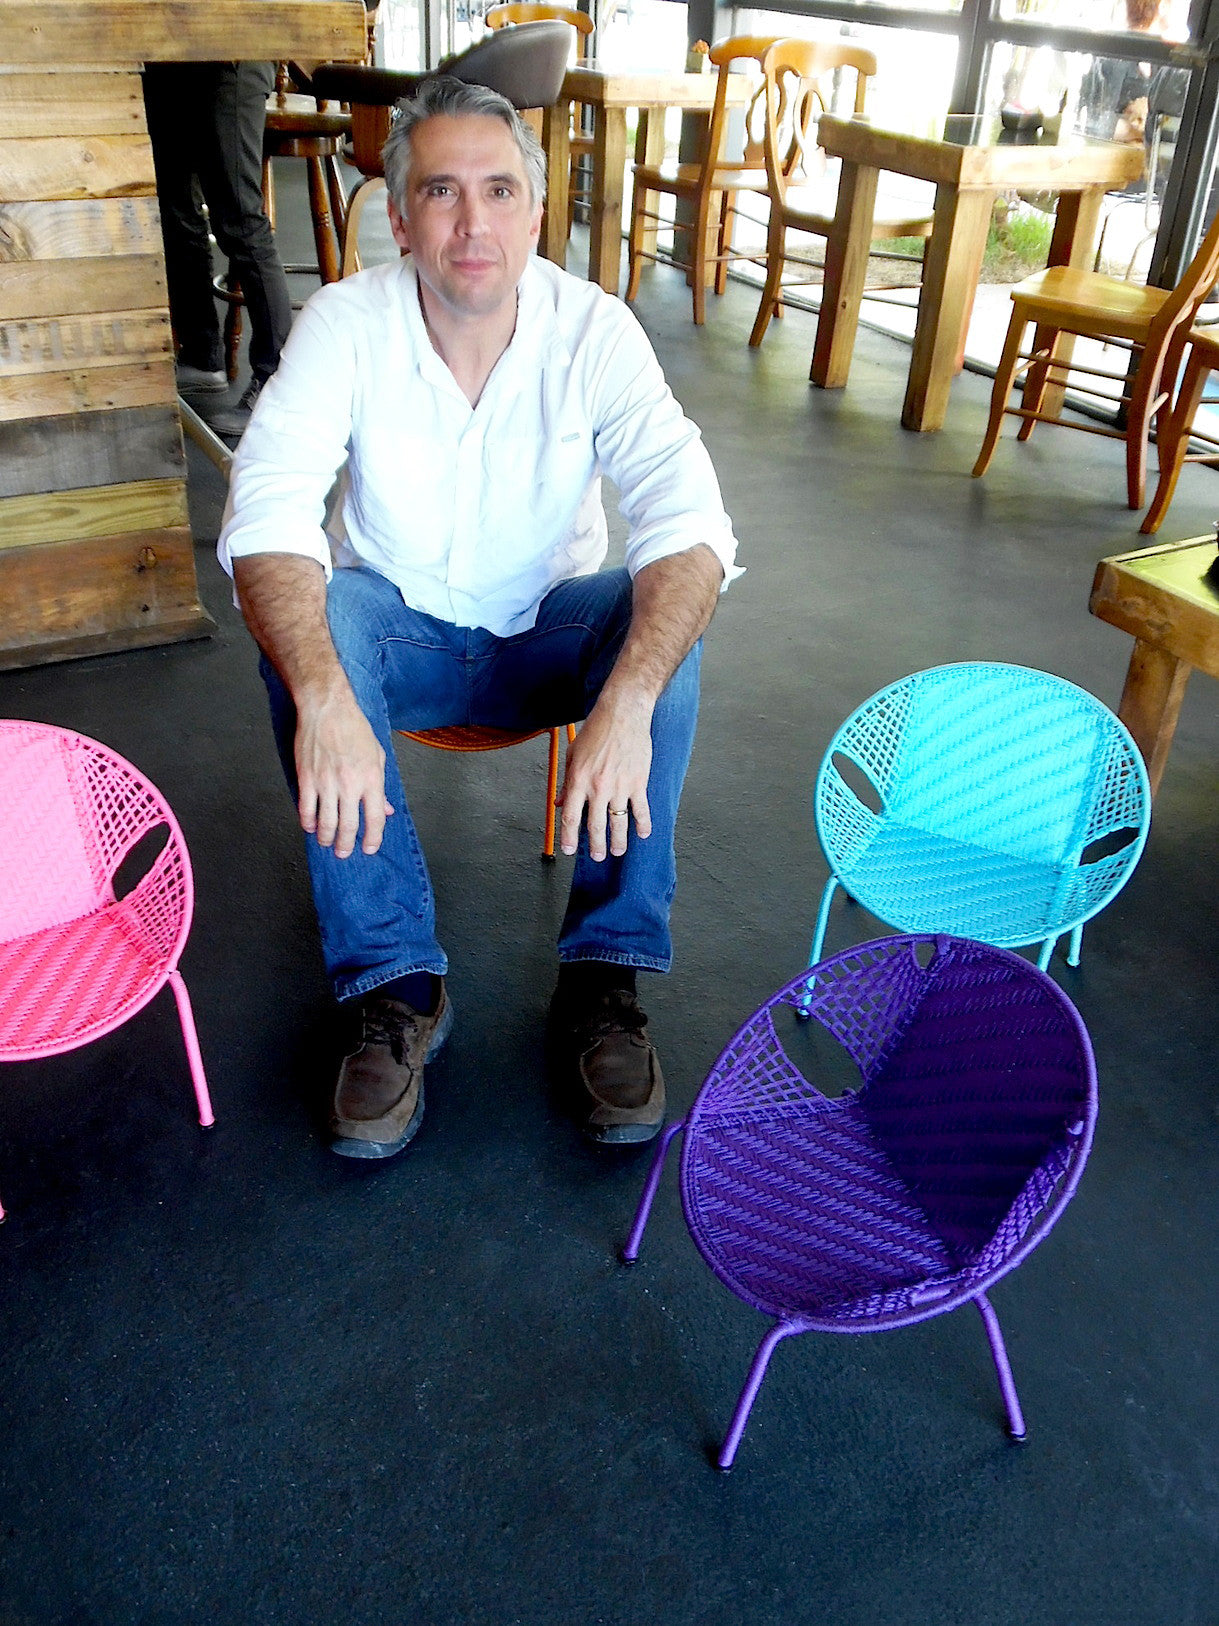 Mini Acapulco Chairs